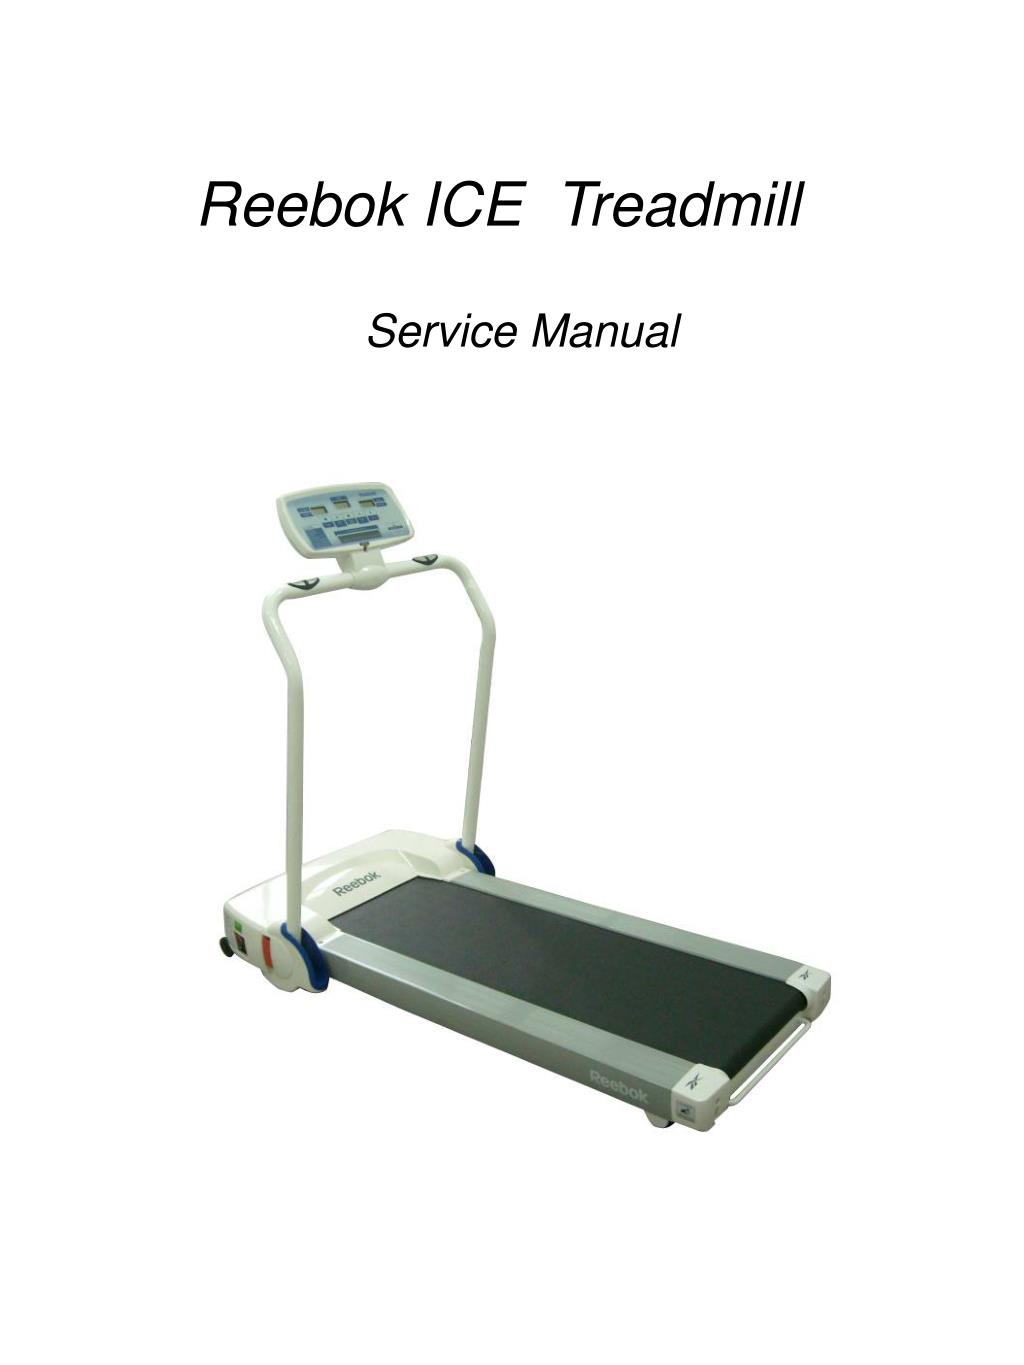 how to service a reebok treadmill